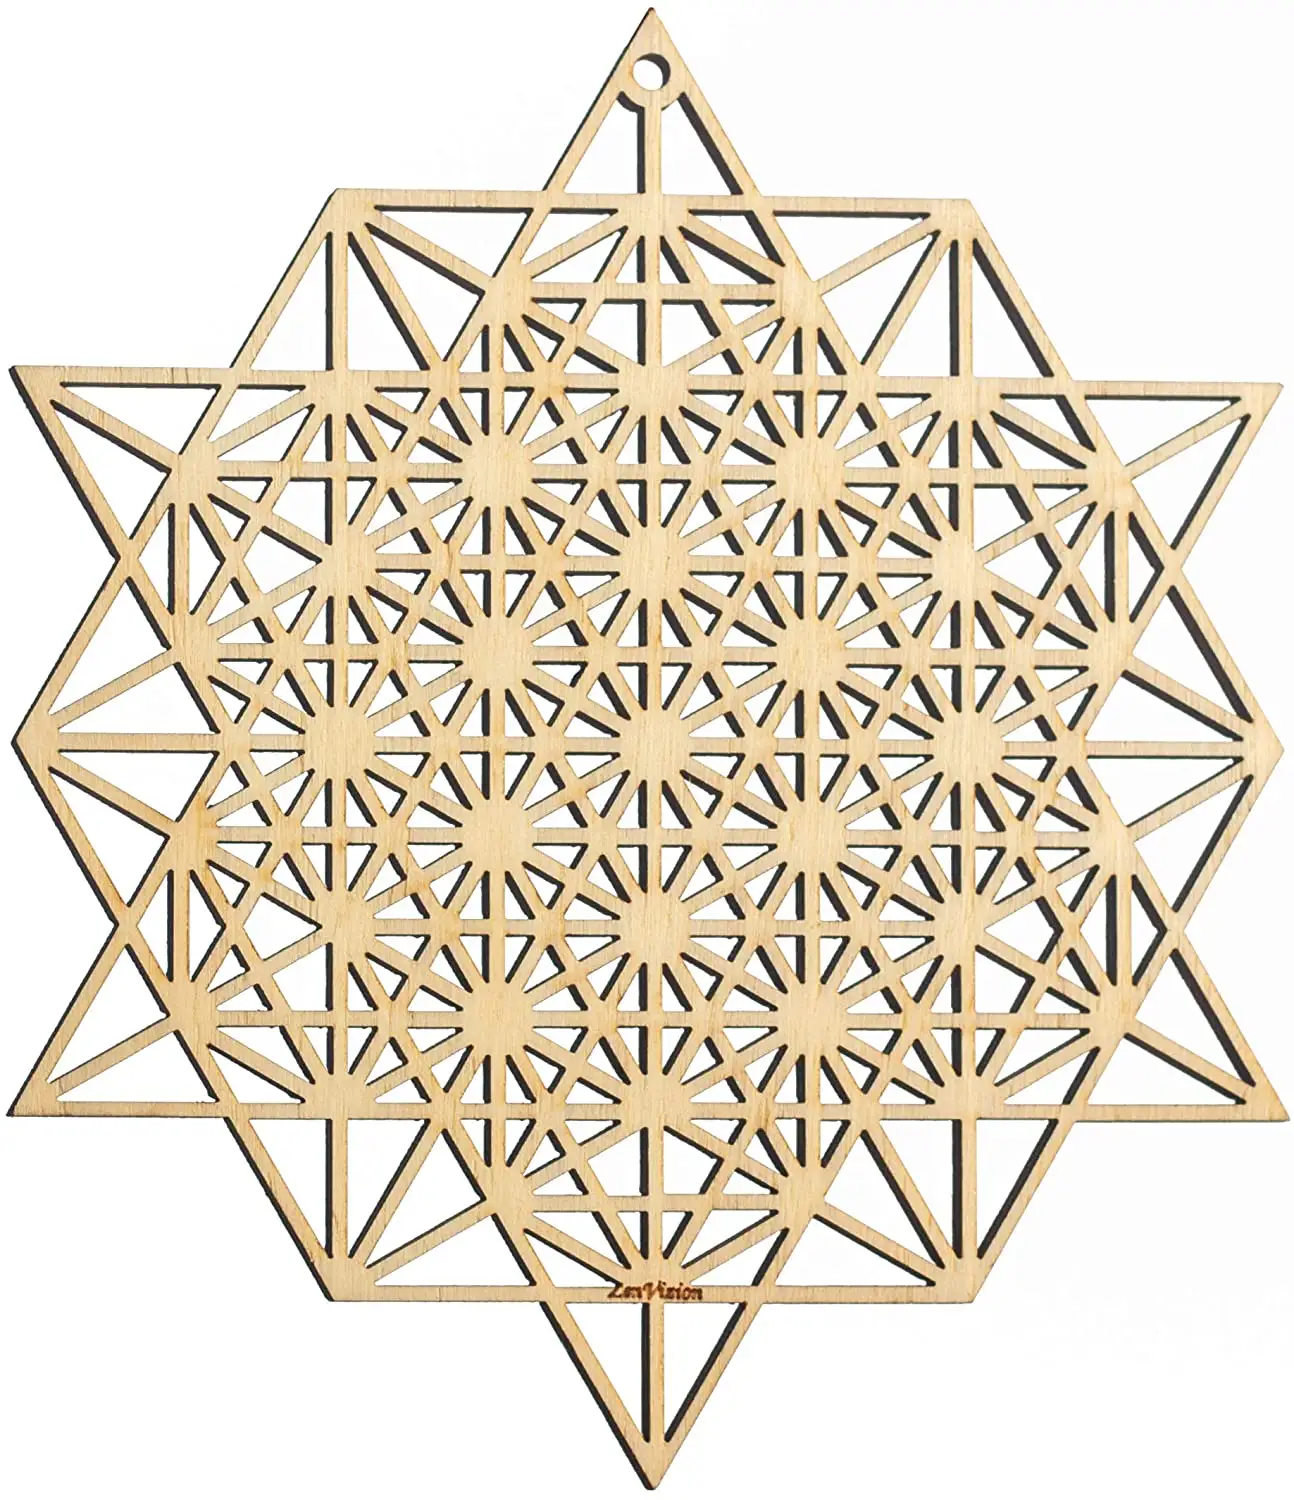 64 Grid Star Tetraeder Kristall gitter Holz kristall gitter Heilige Geometrie Wand kunst Hängende Wand skulptur Meditation